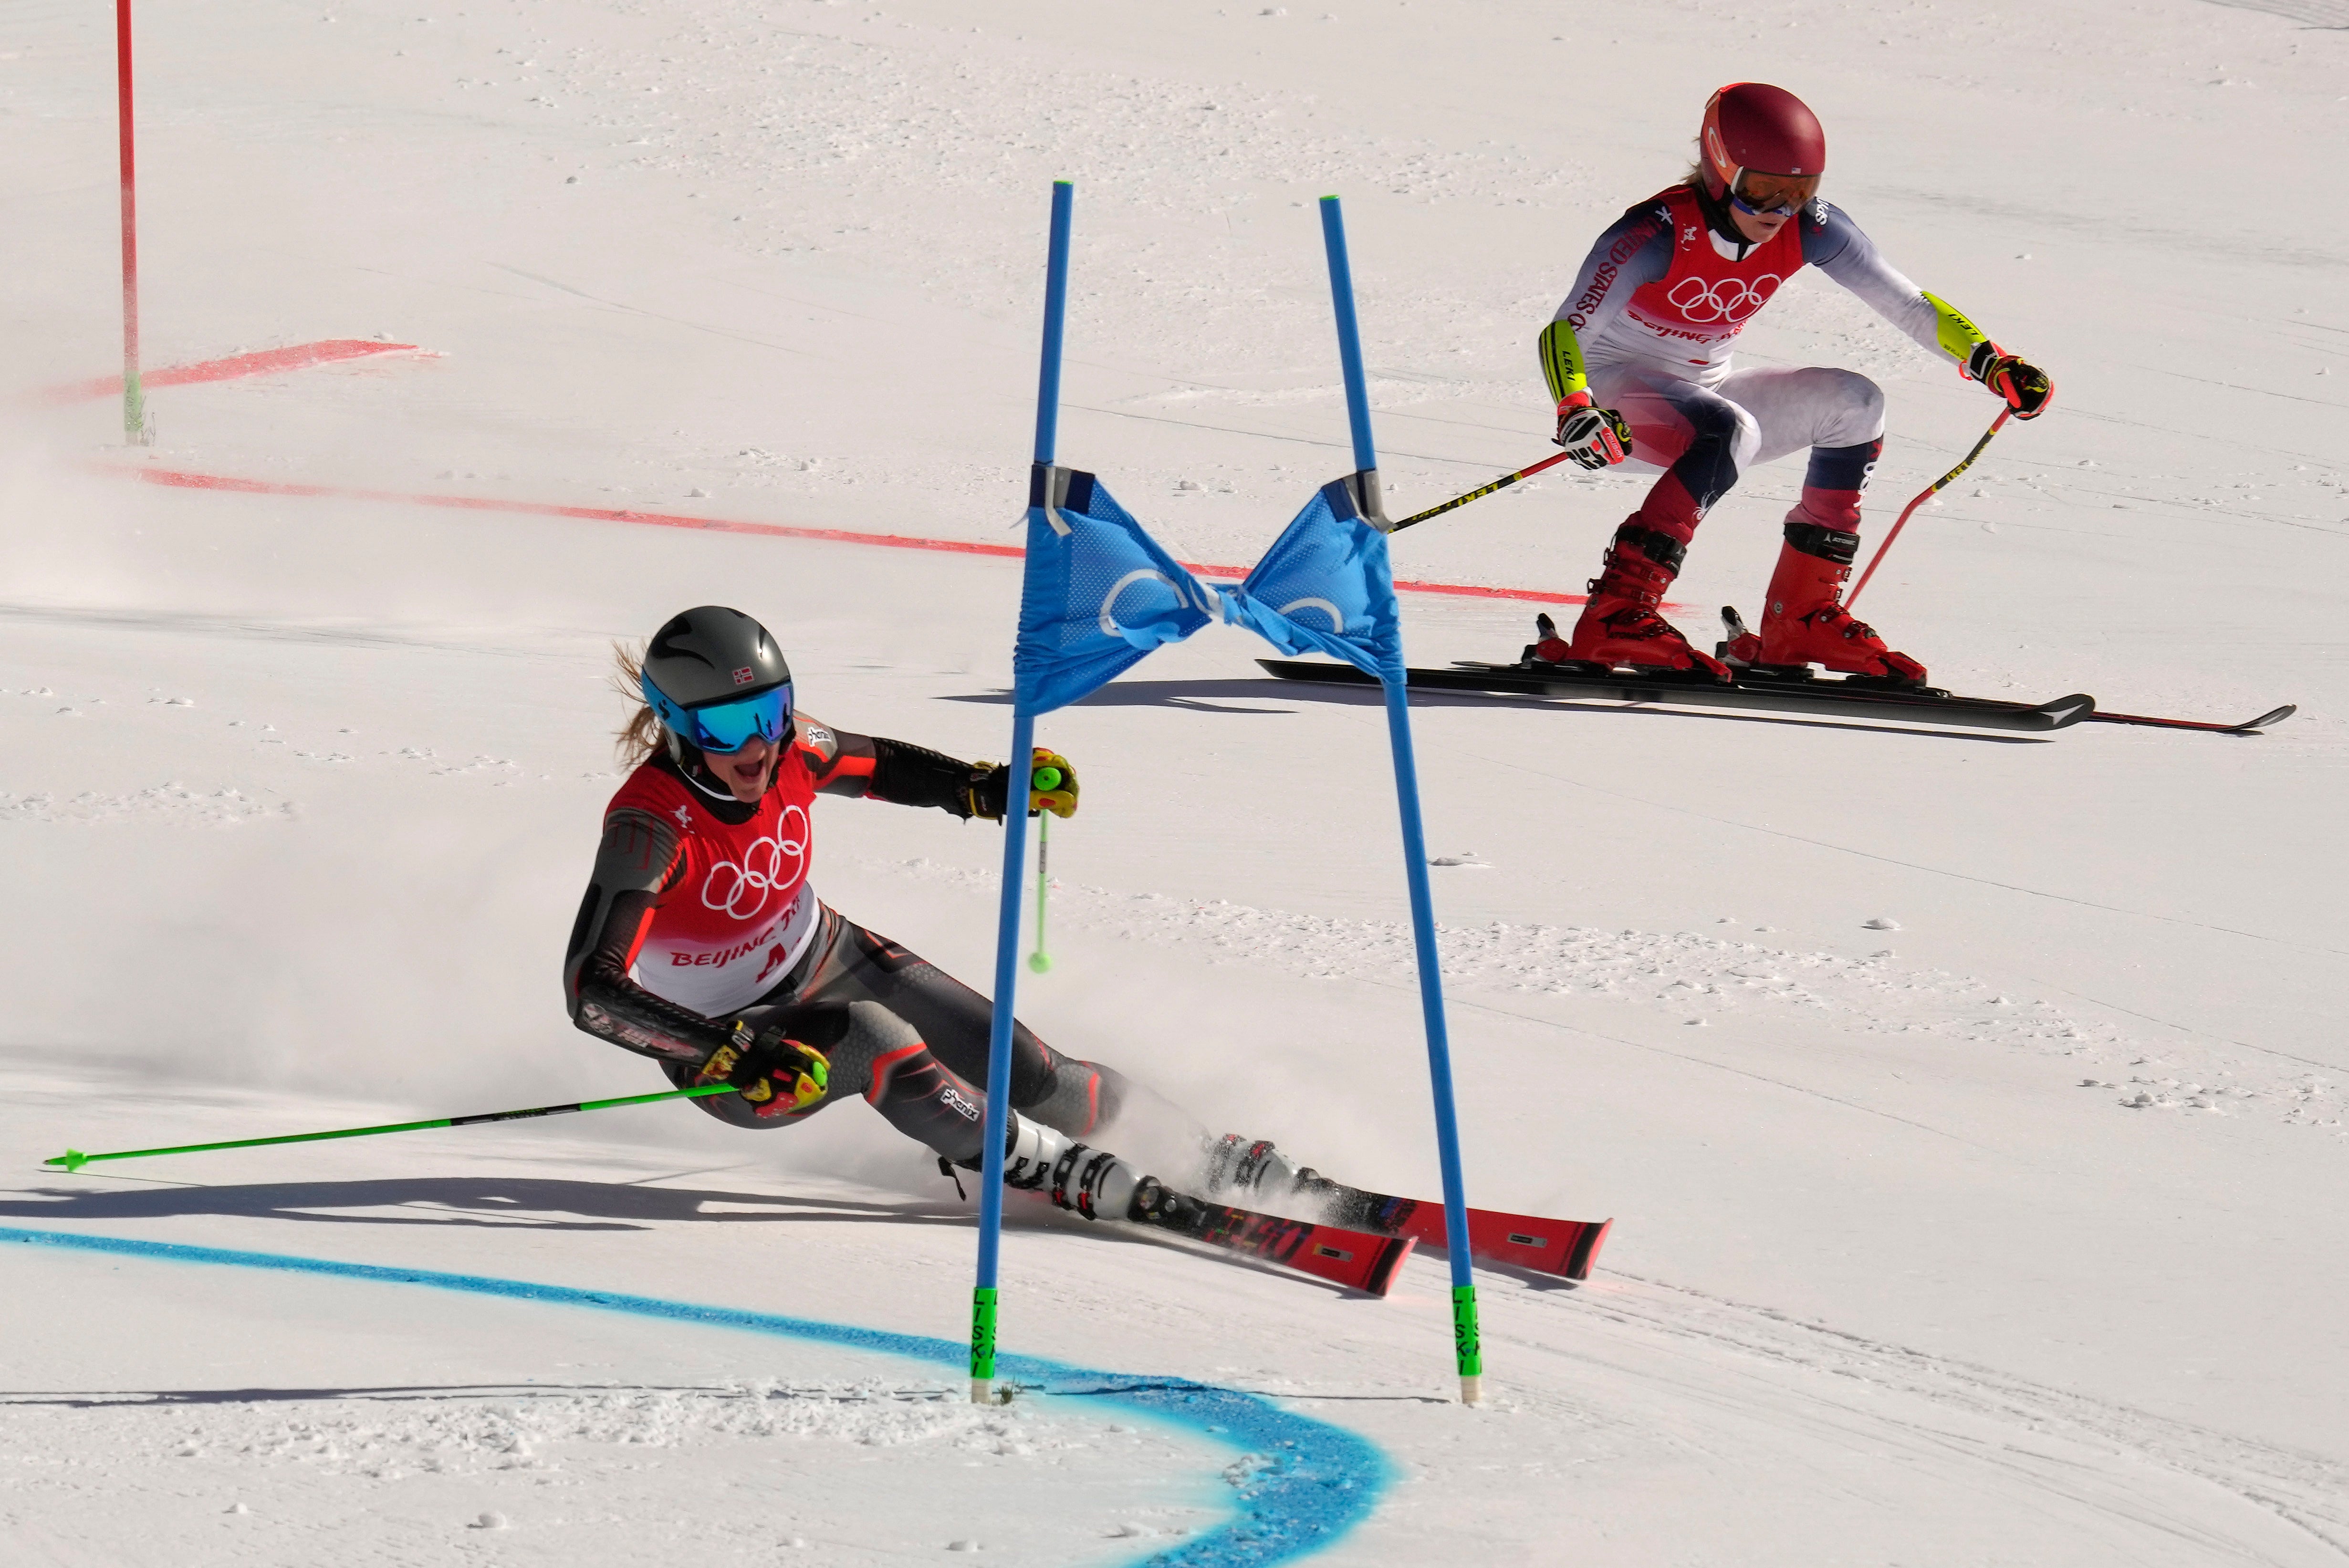 Beijing Olympics Alpine Skiing